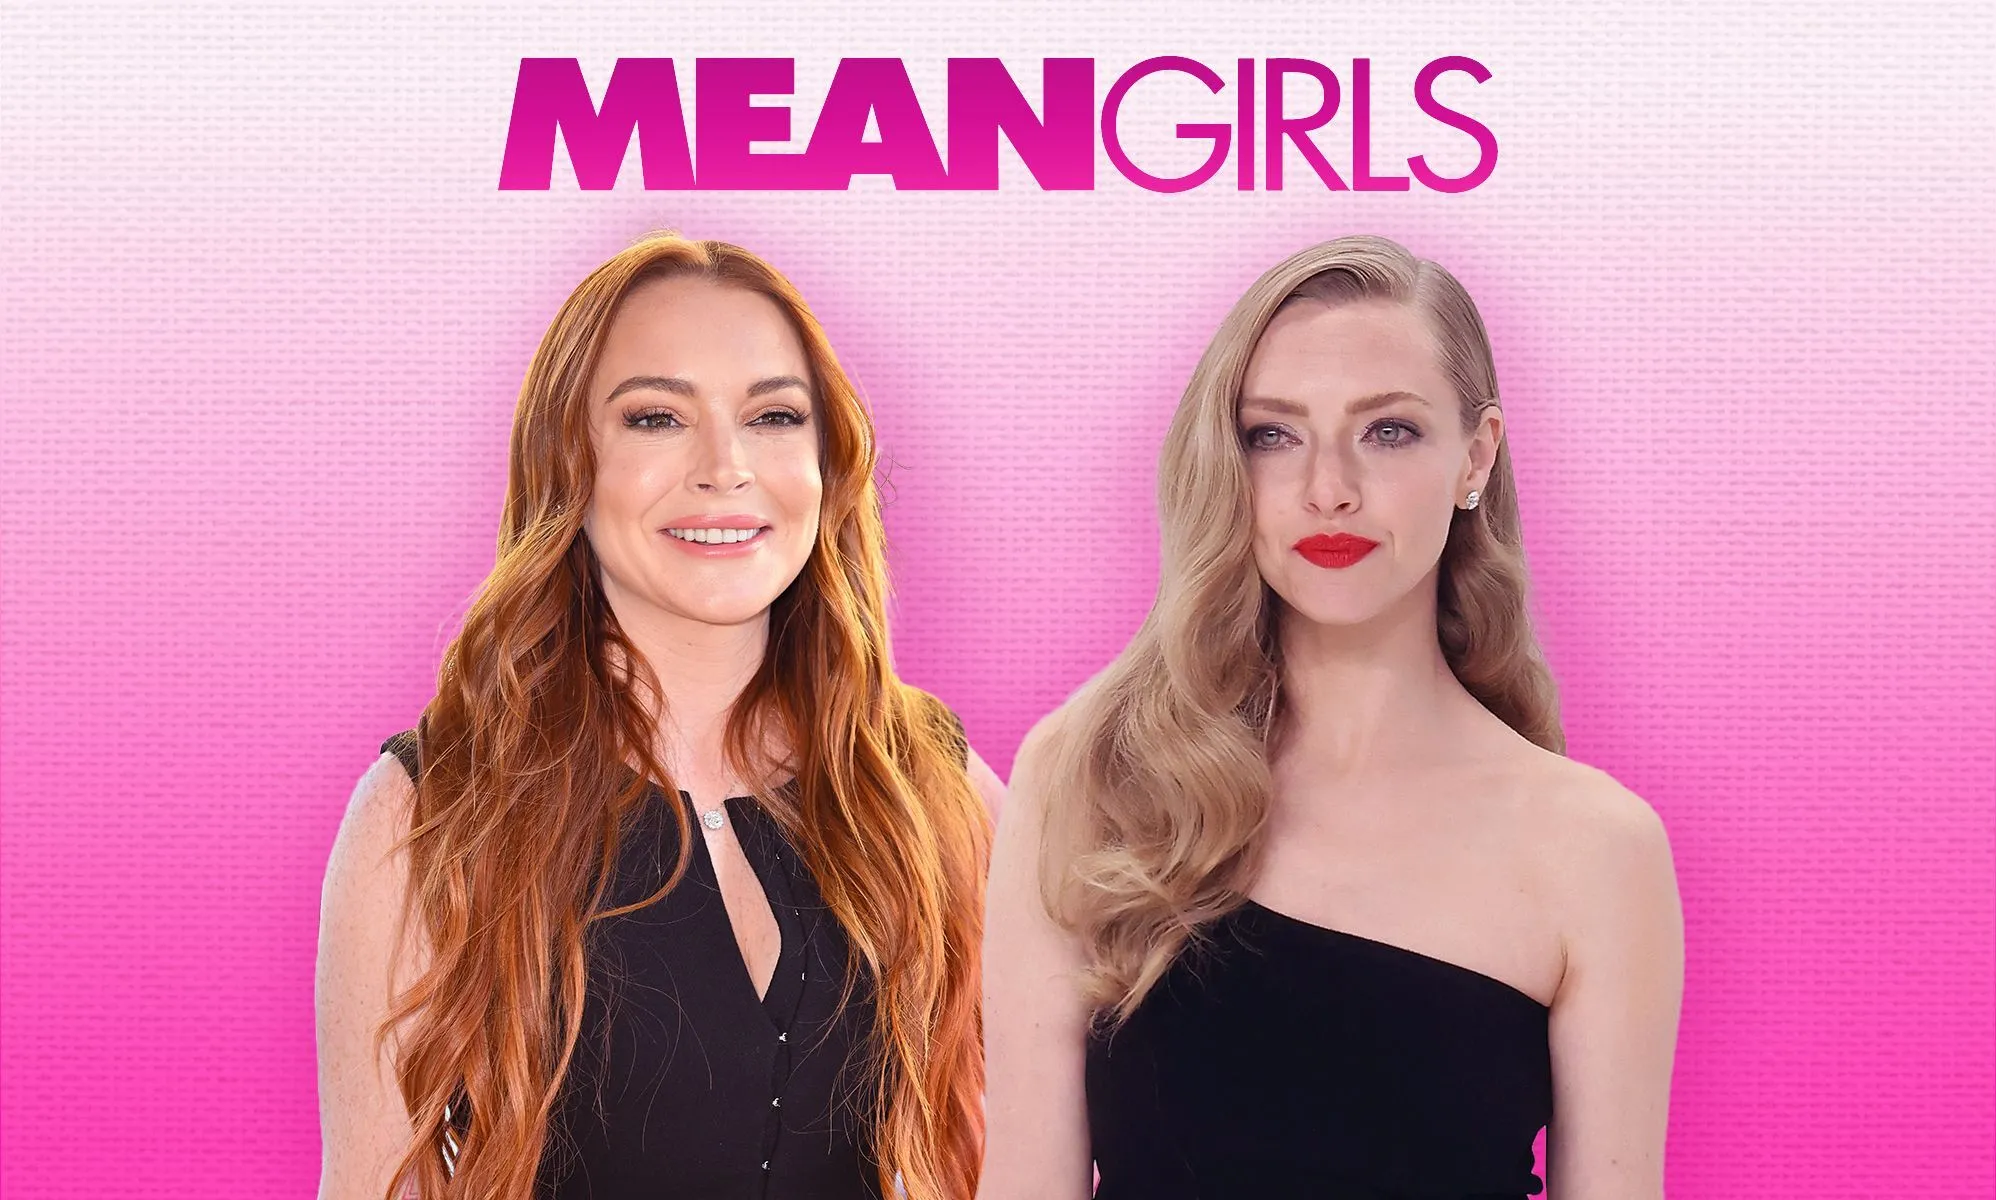 Lindsay Lohan Lesbian Dildo - Lindsay Lohan, Amanda Seyfried weigh in on Mean Girls sequel